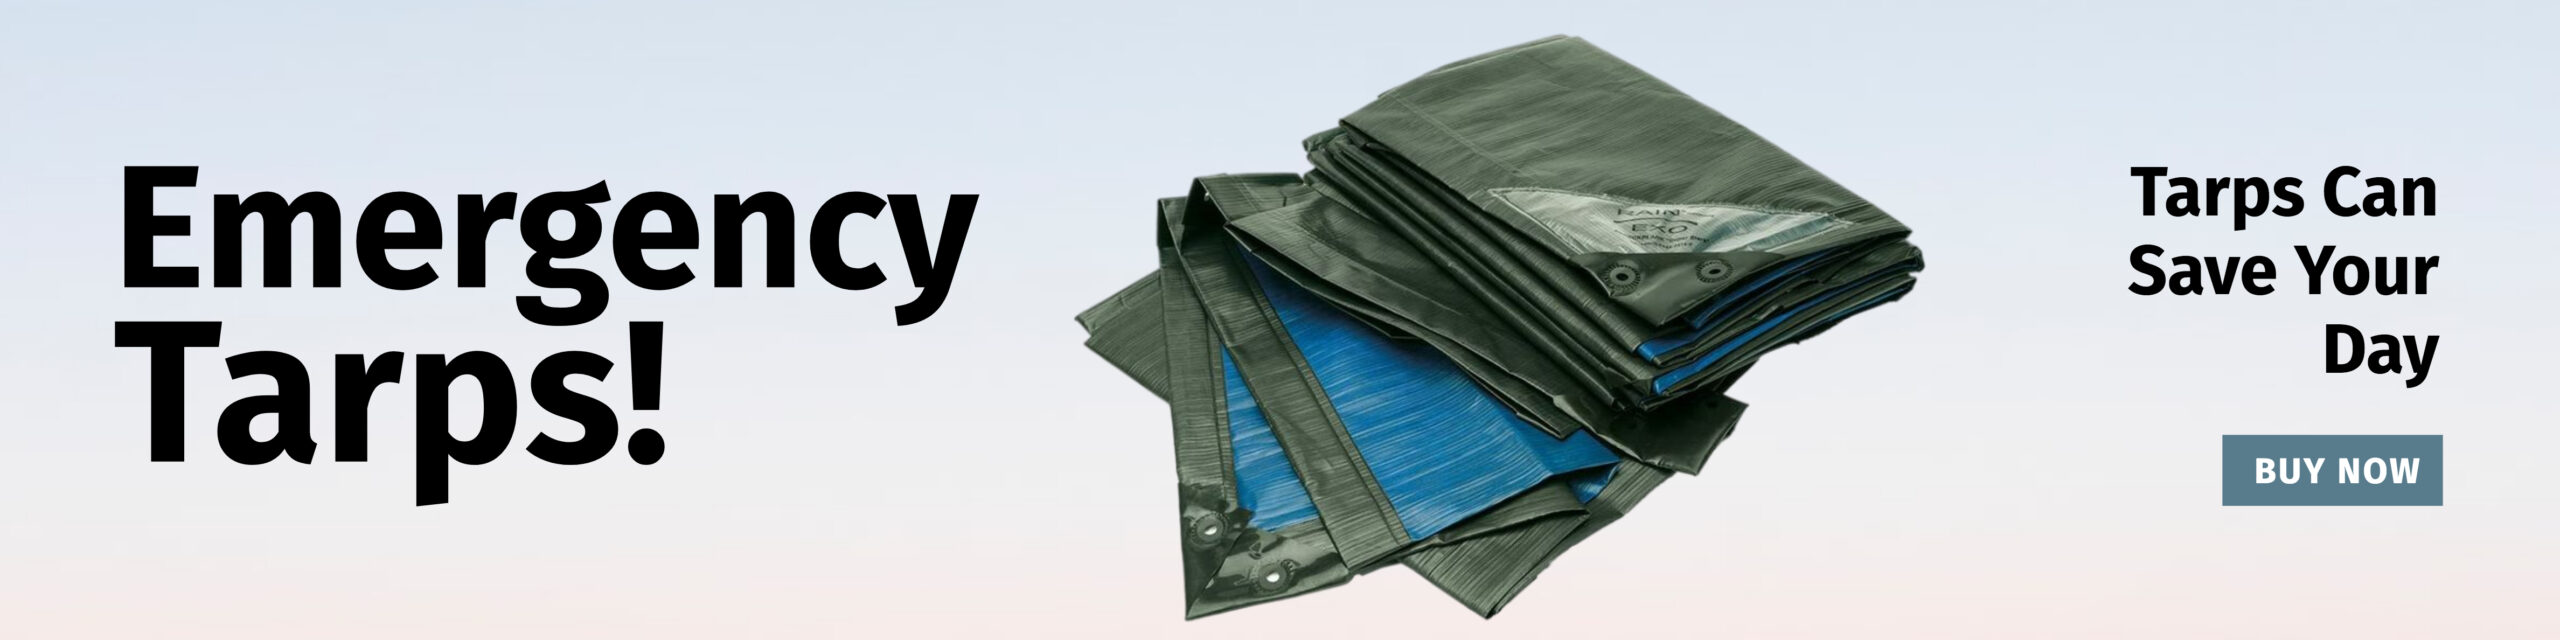 emergency tarps - nellai tarpaulin